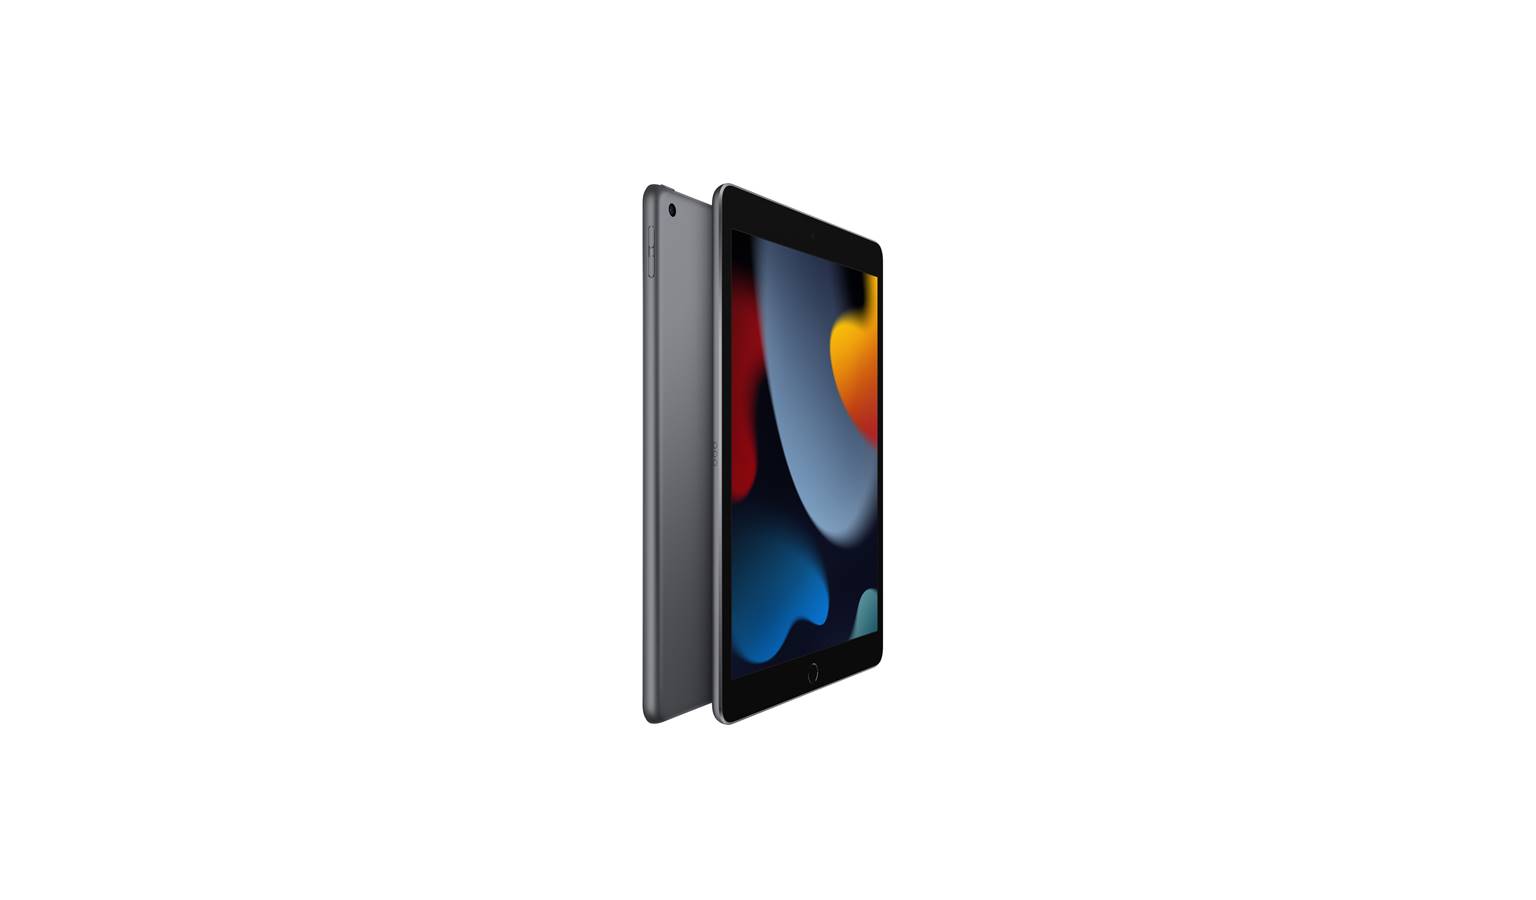 Apple iPad 9th Generation 10.2-inch 64GB Wi-Fi - Space Gray (MK2K3ZP/A) |  Harvey Norman Singapore